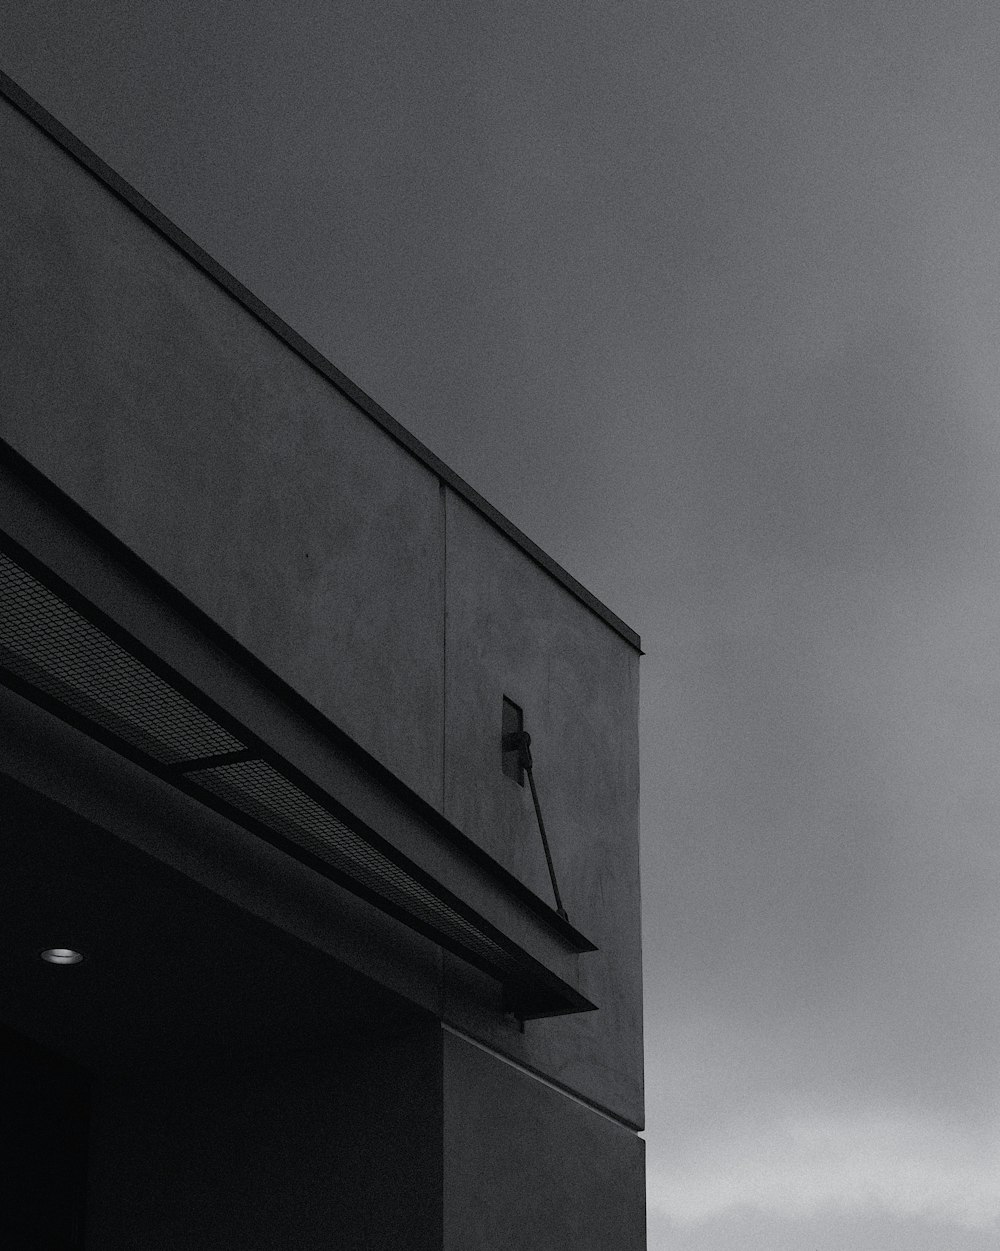 black concrete building under gray sky